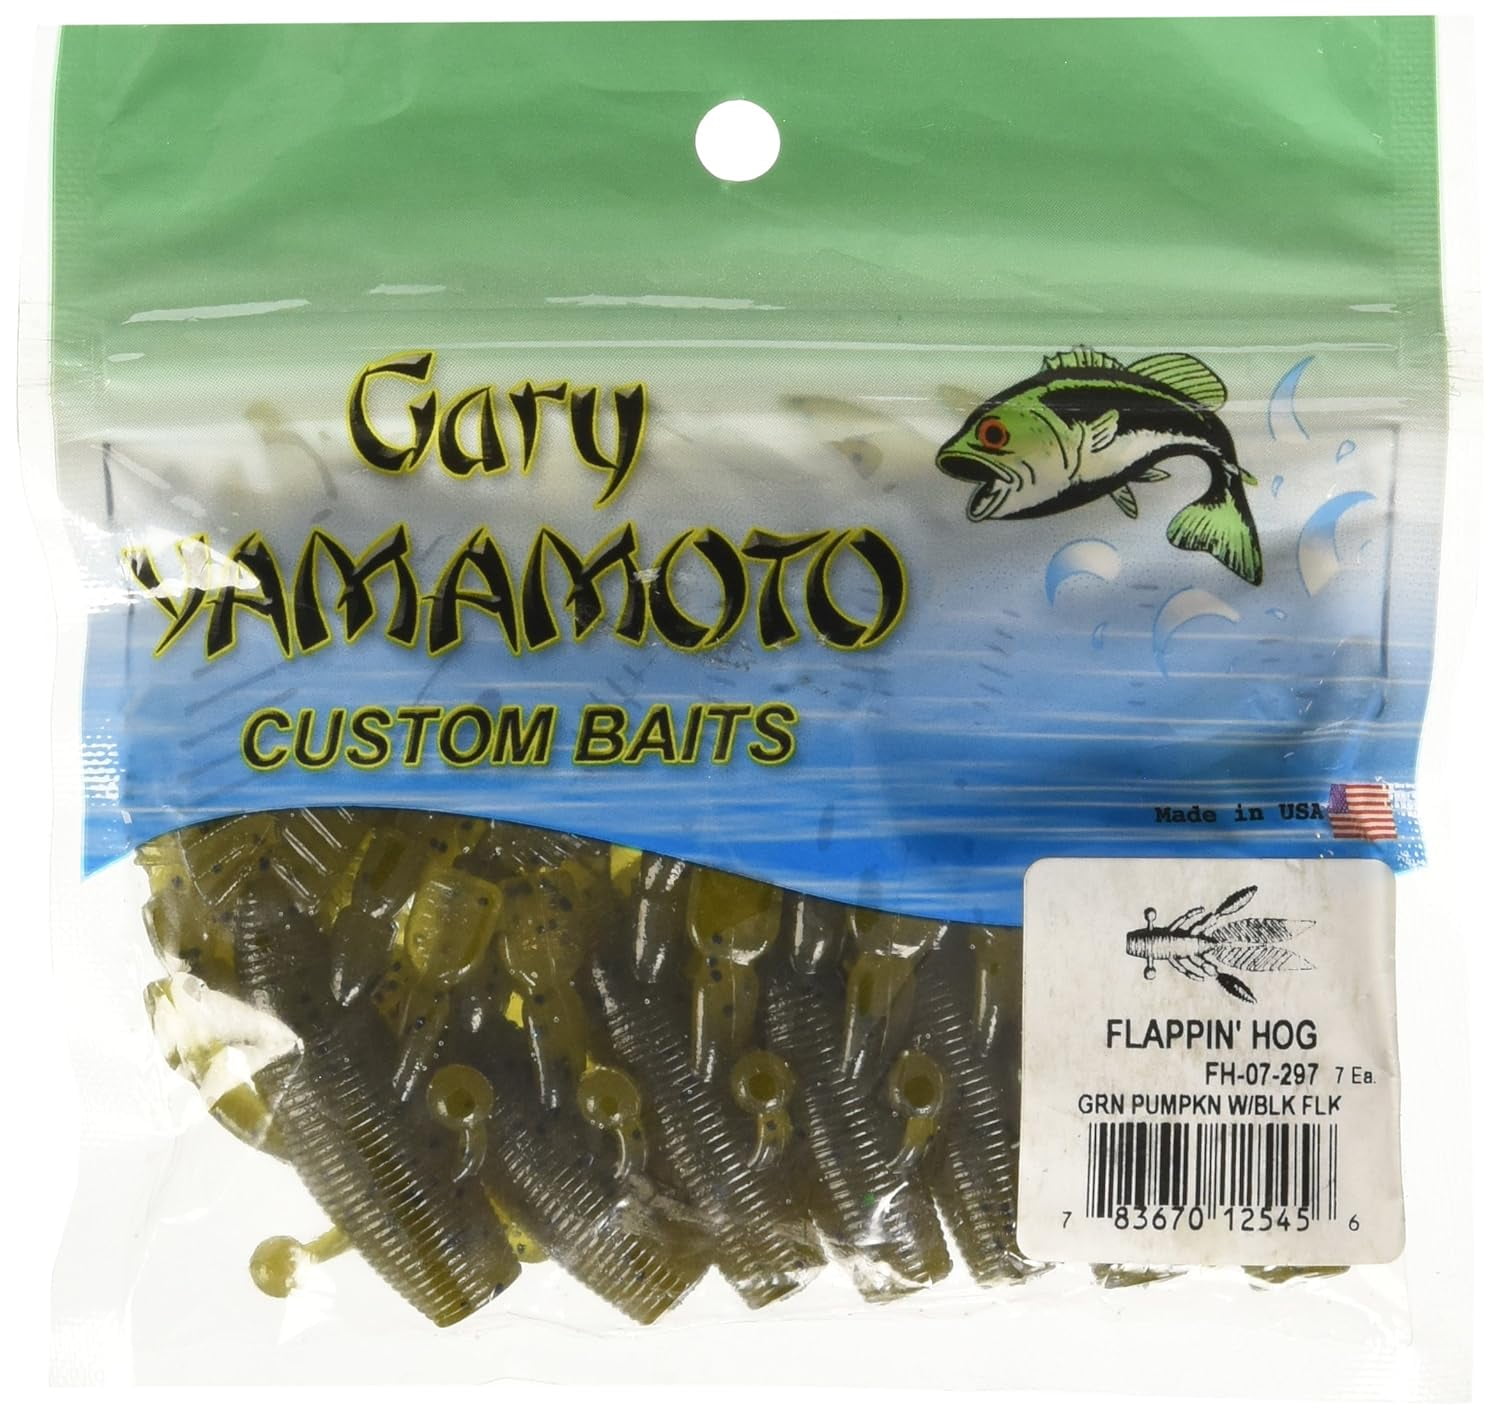 Gary Yamamoto Flappin' Hog Bait 7 Pack Green Pumpkin Black Flake FH-07-297